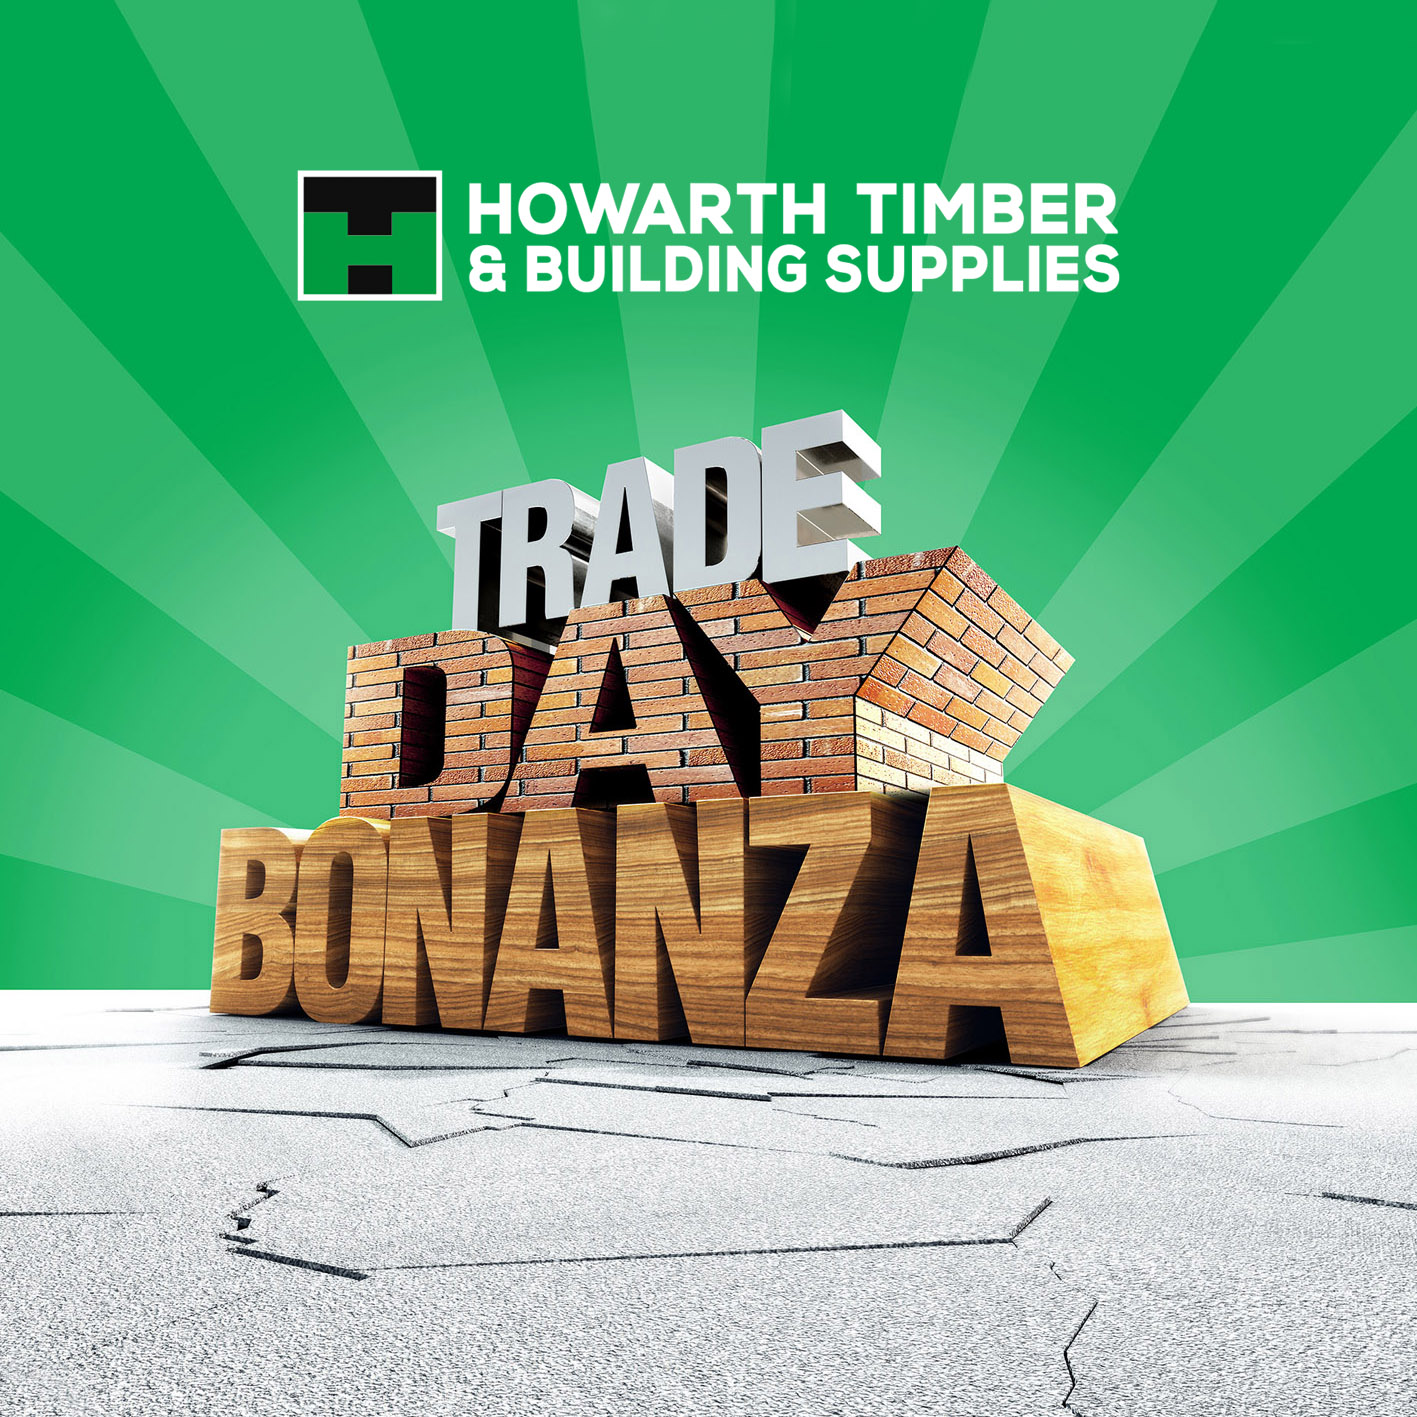 Howarth Timber & Building Supplies' Third Trade Day Bonanza